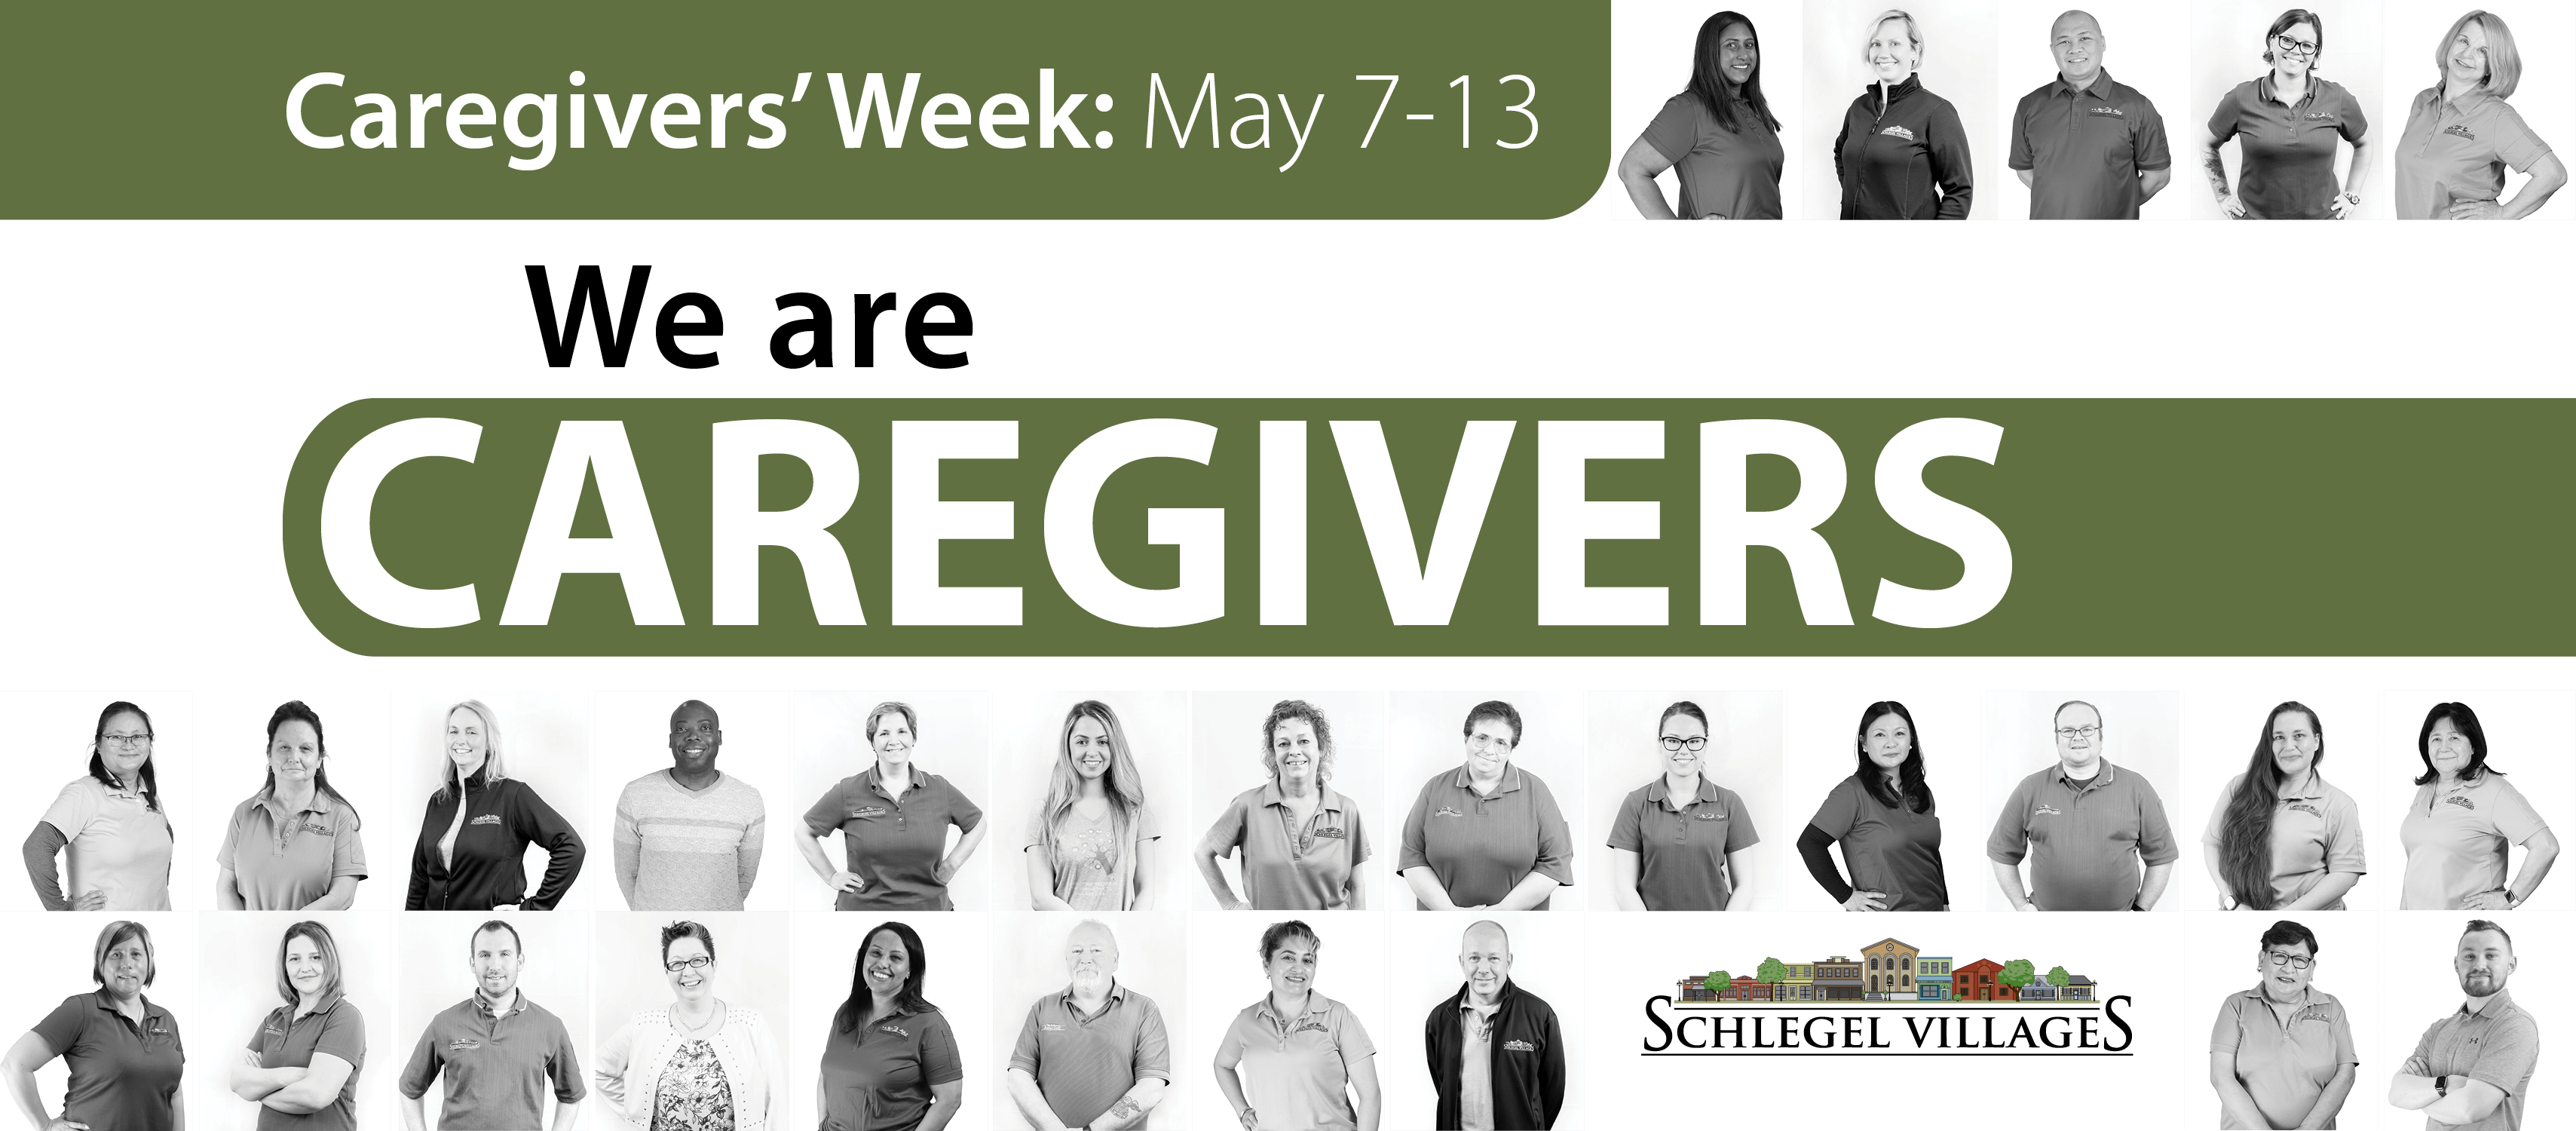 Photos of Caregivers at Schlegel Villages in promotion of Caregivers' Week